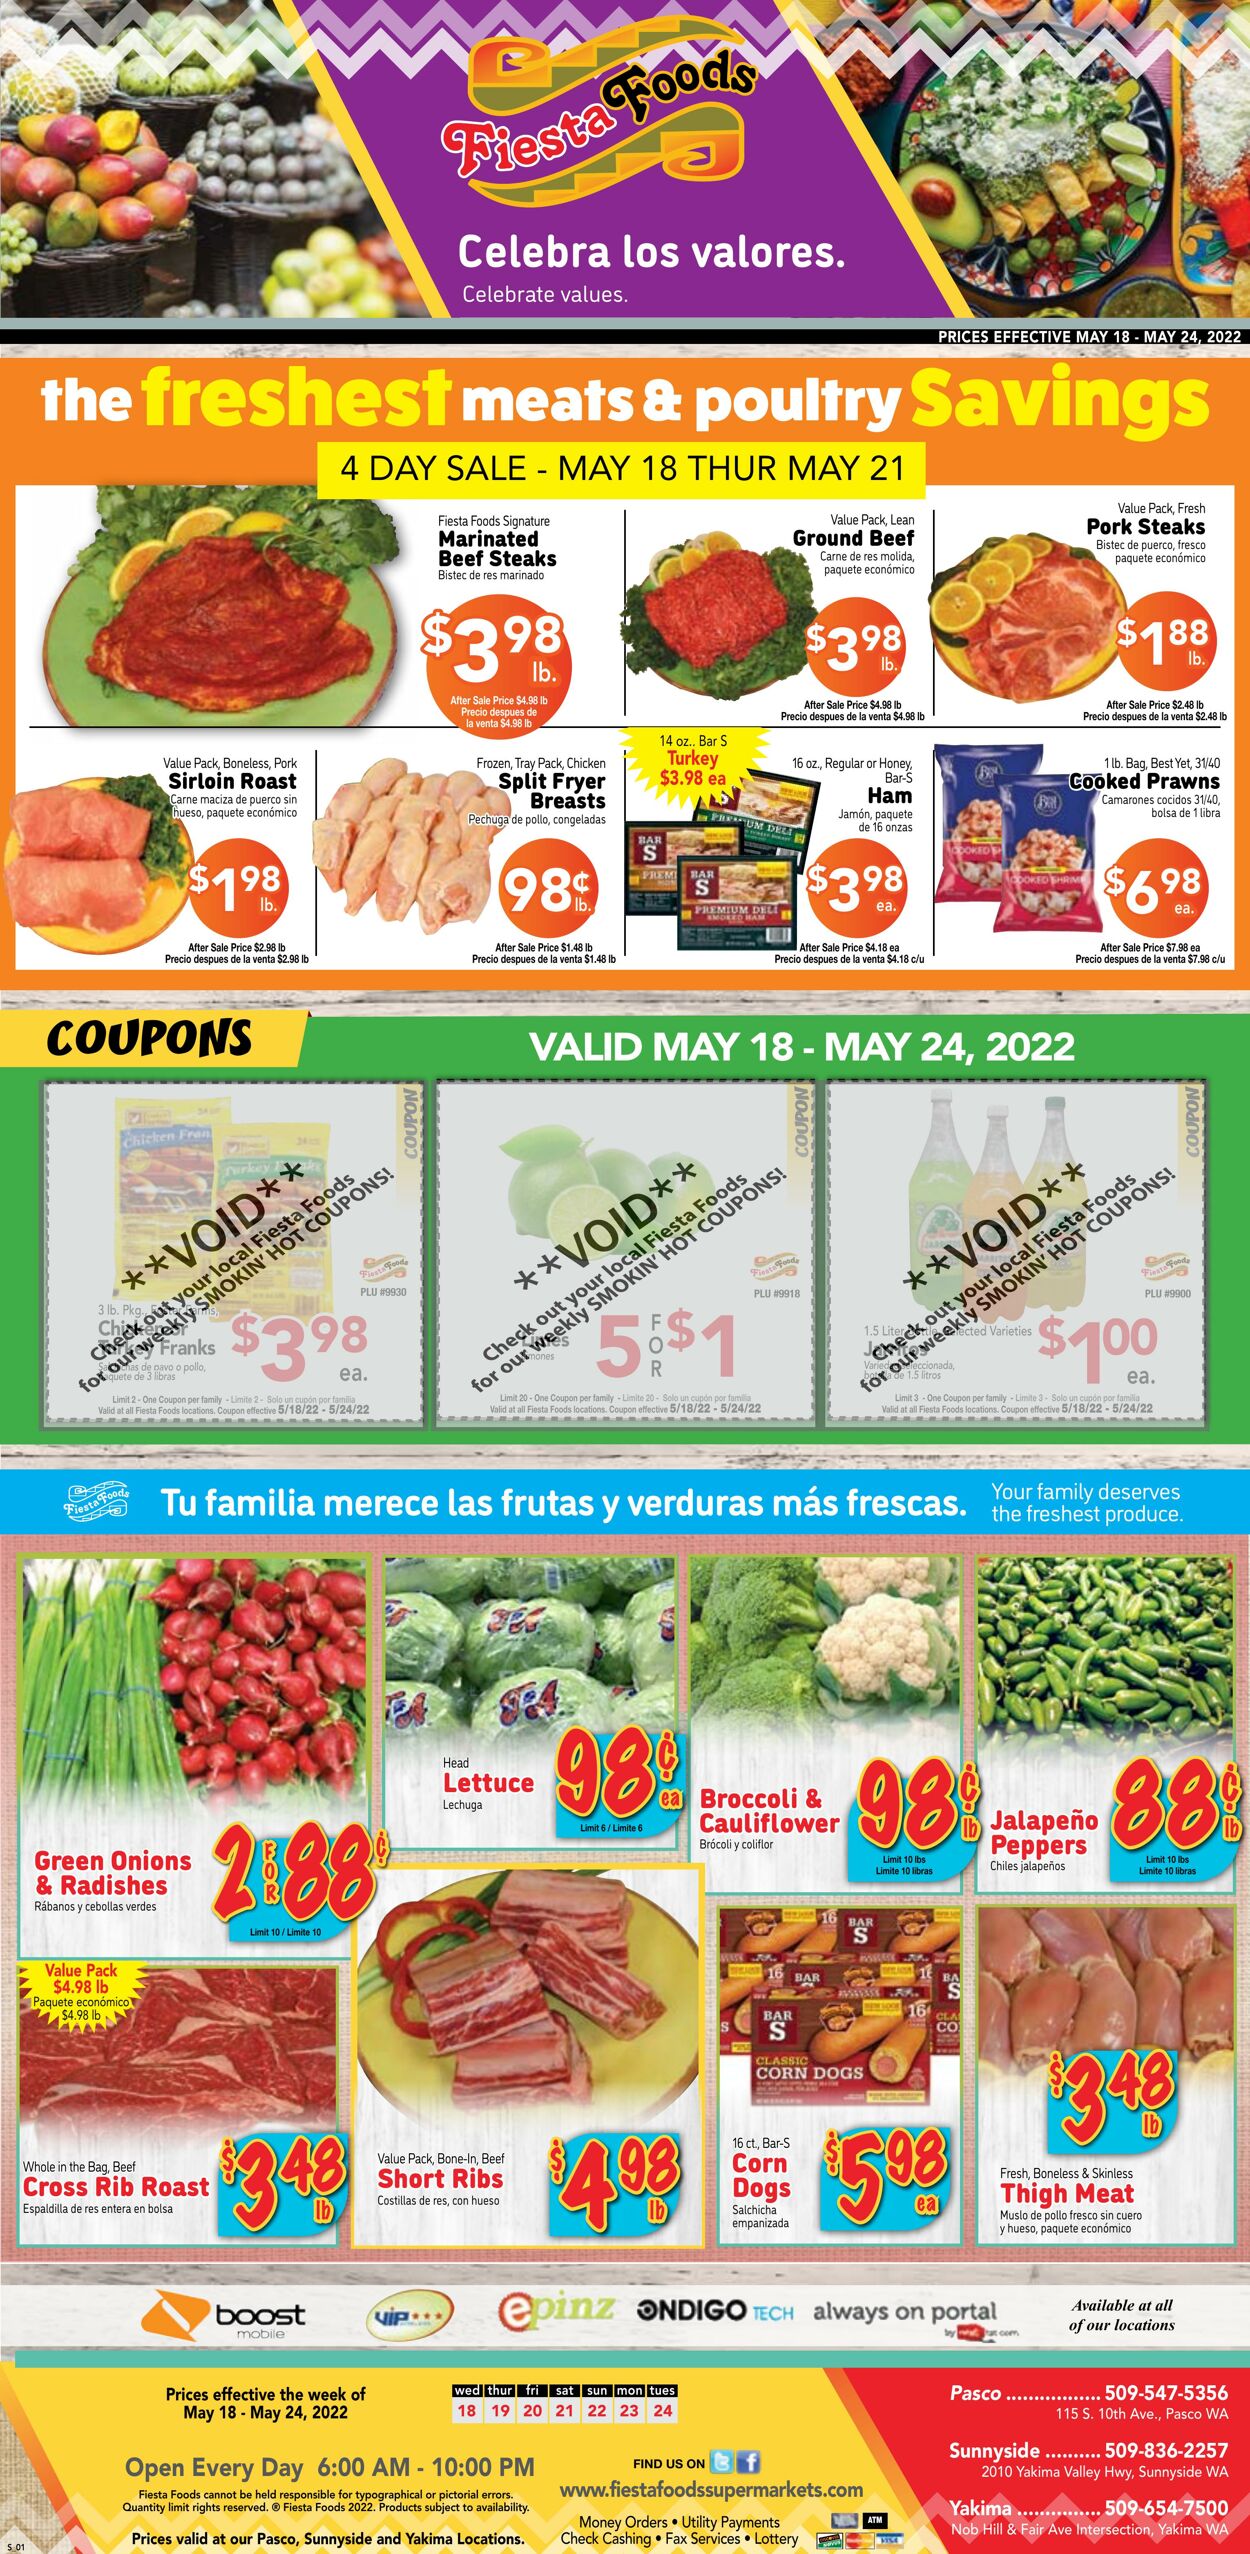 Fiesta Foods Promotional weekly ads